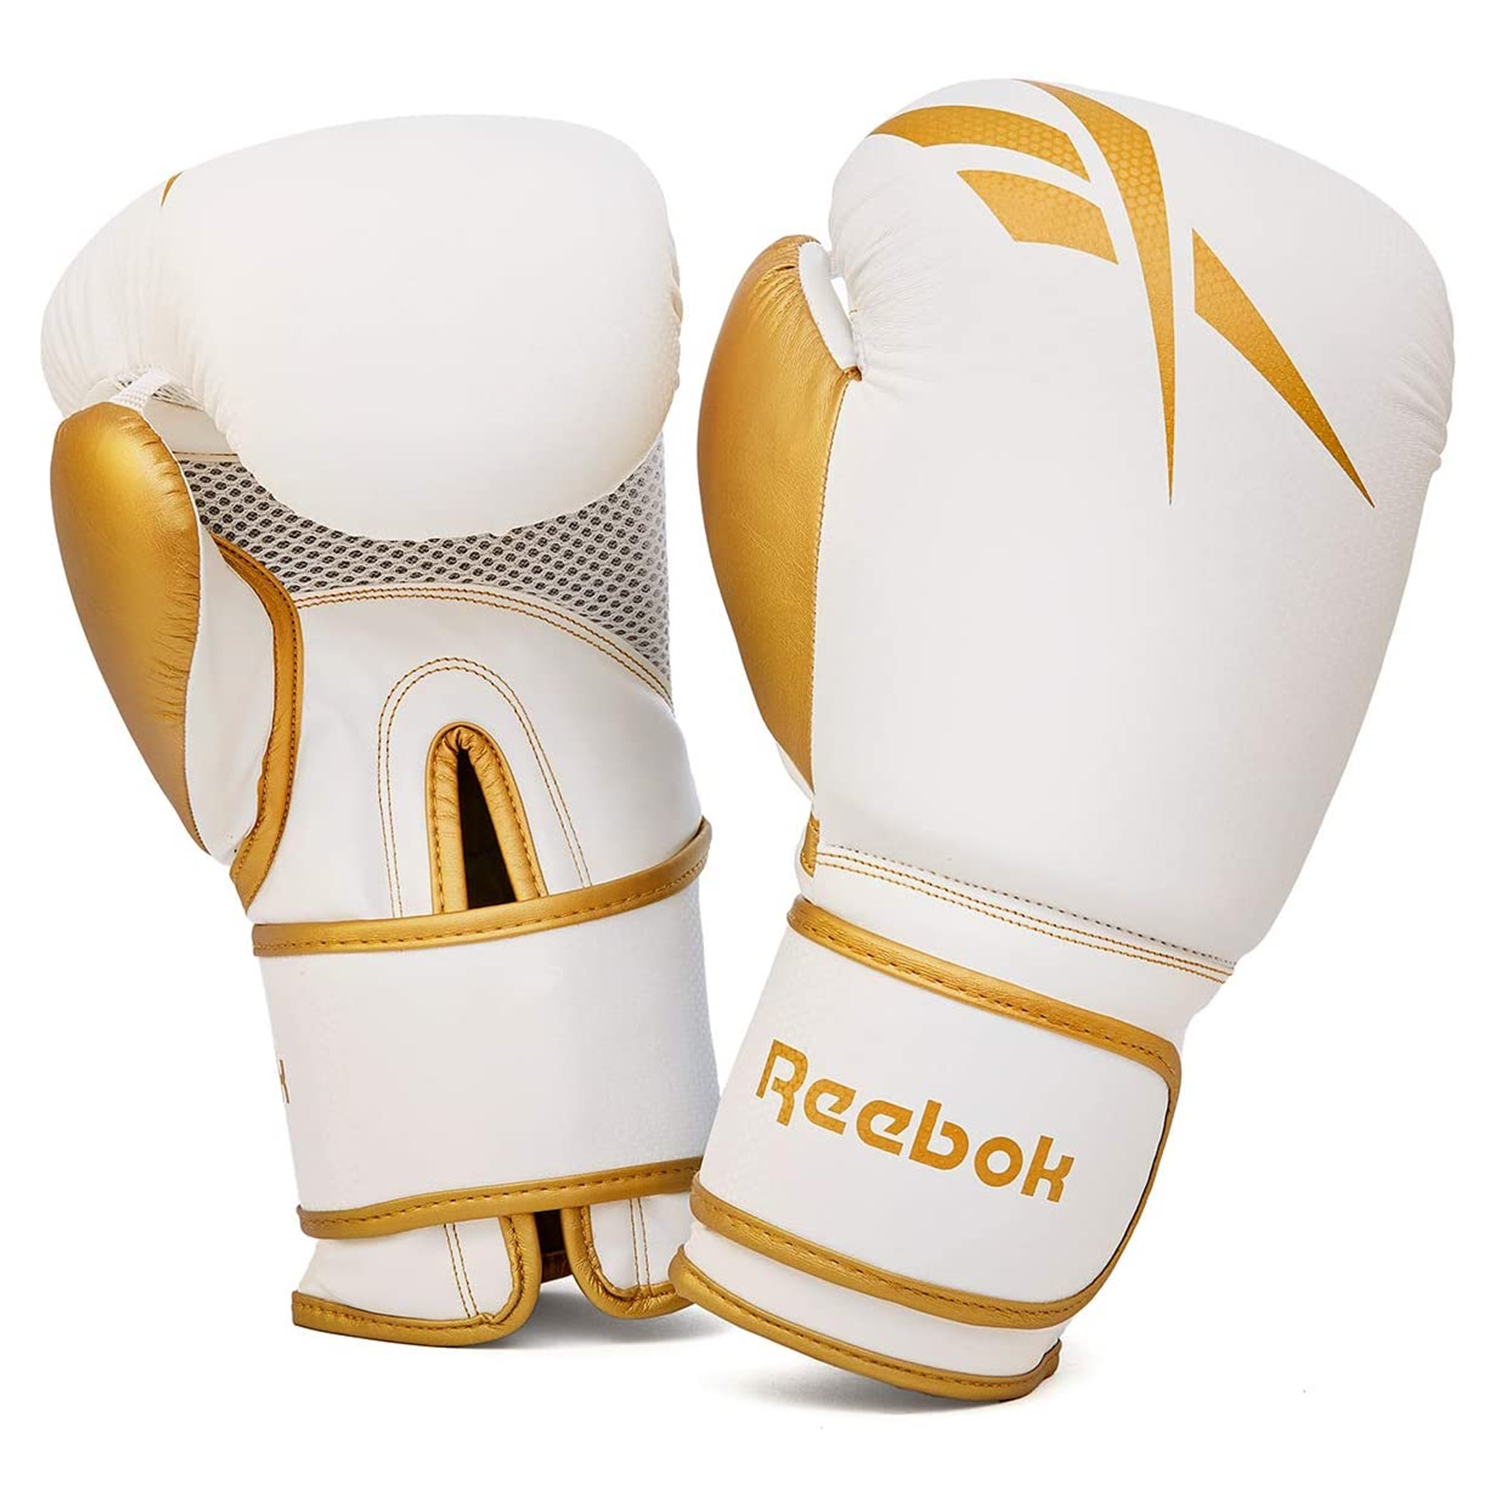 Reebok Fitness Retail Boxing Gloves